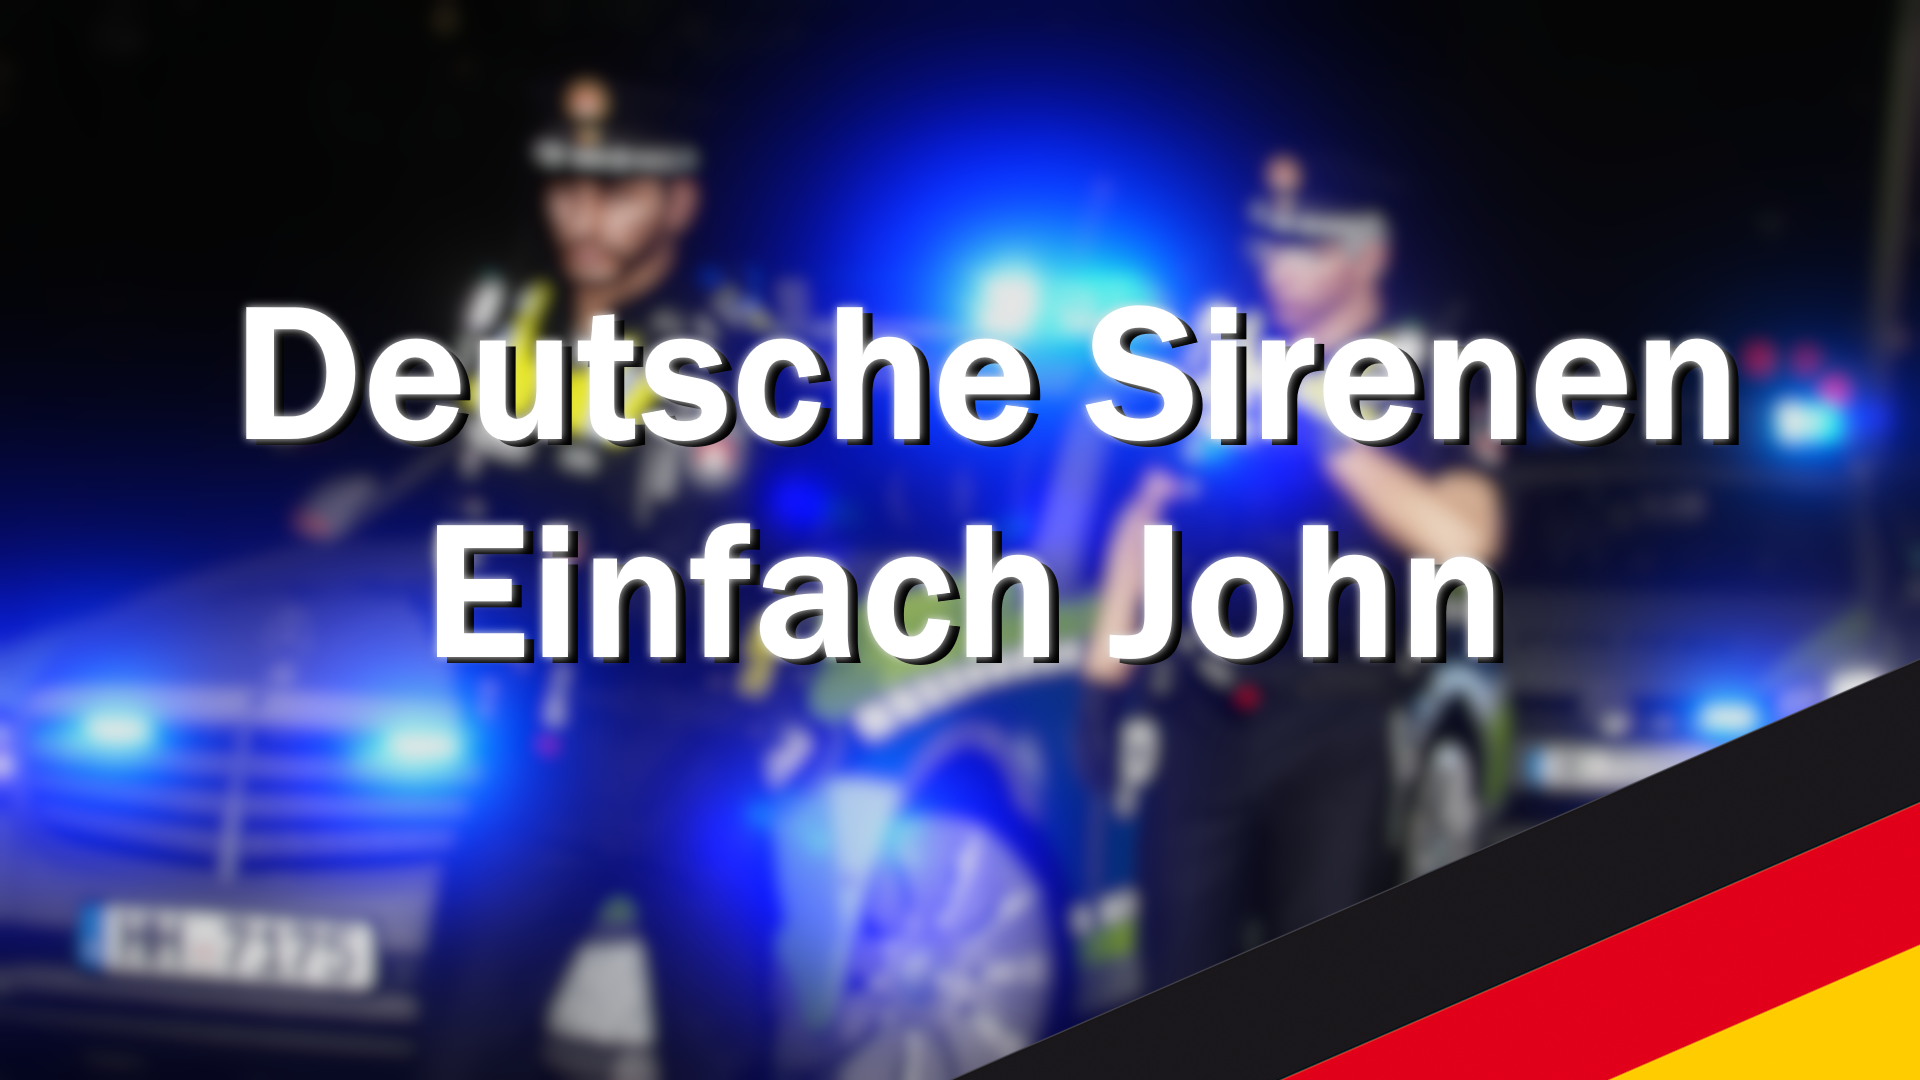 Deutsche Polizei Sirene/German Police Siren - Audio Modifications 